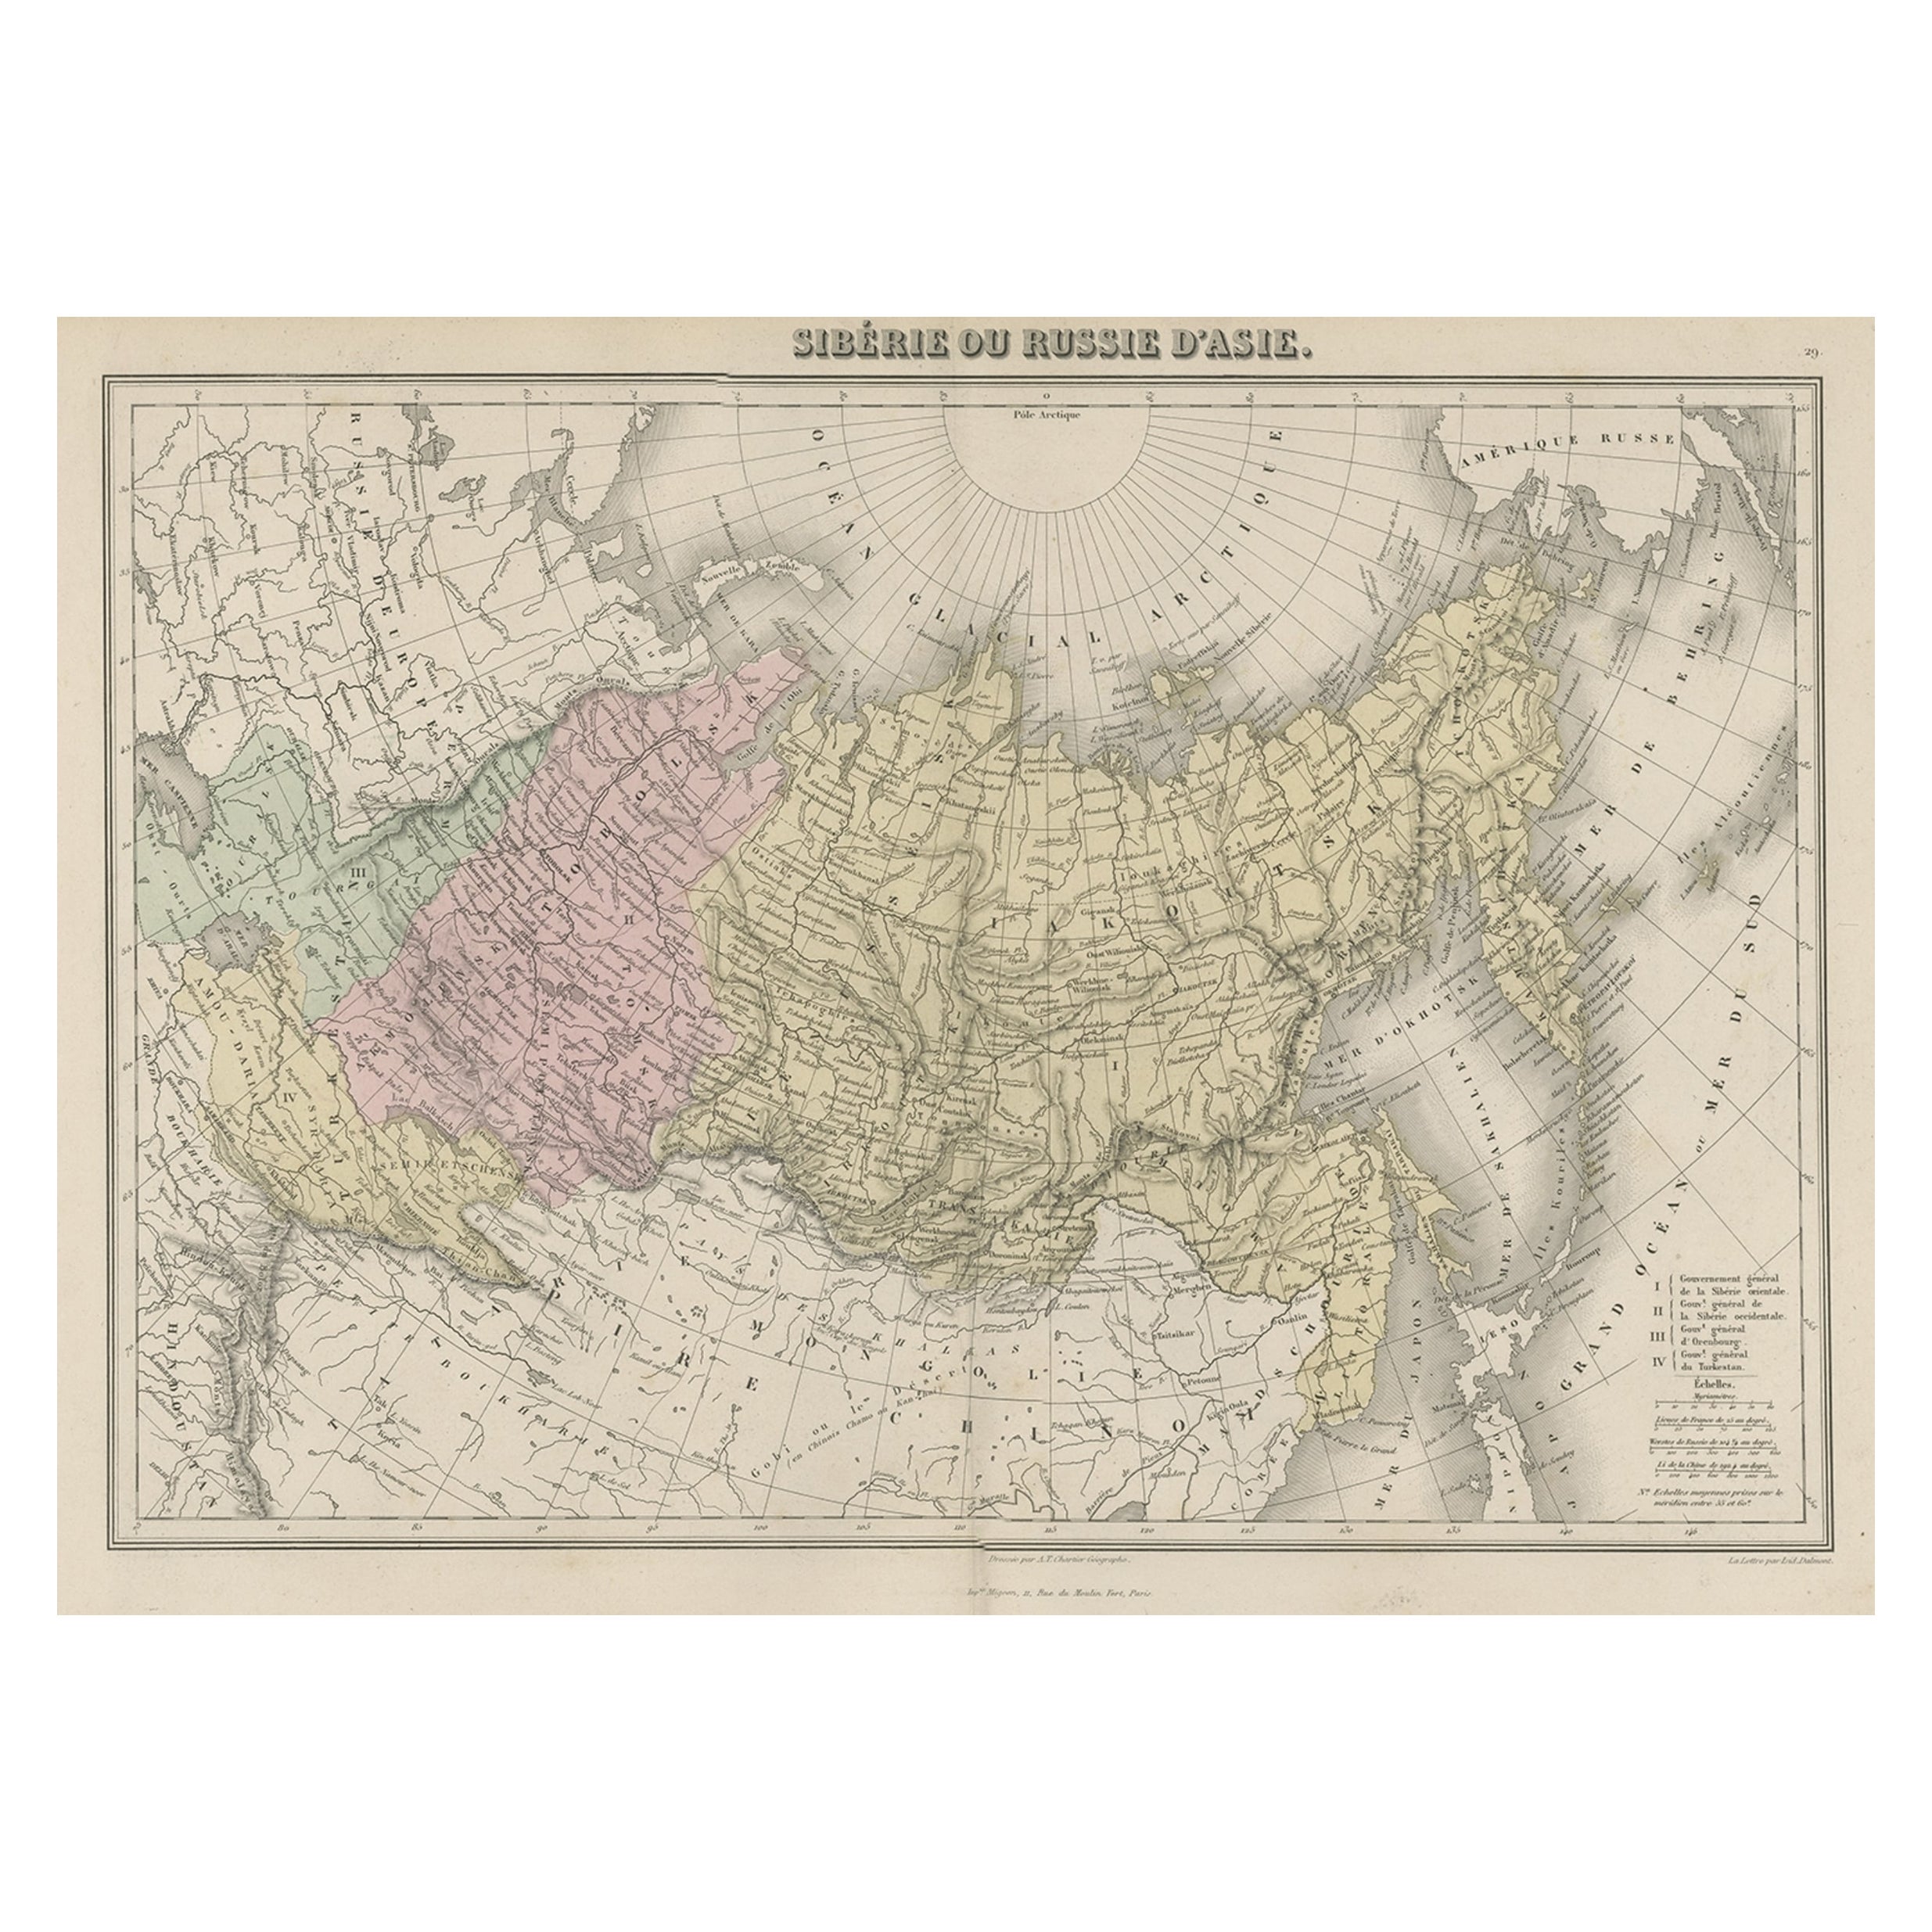 Original Antique Map Covering the Russian Empire in Asia, 1880